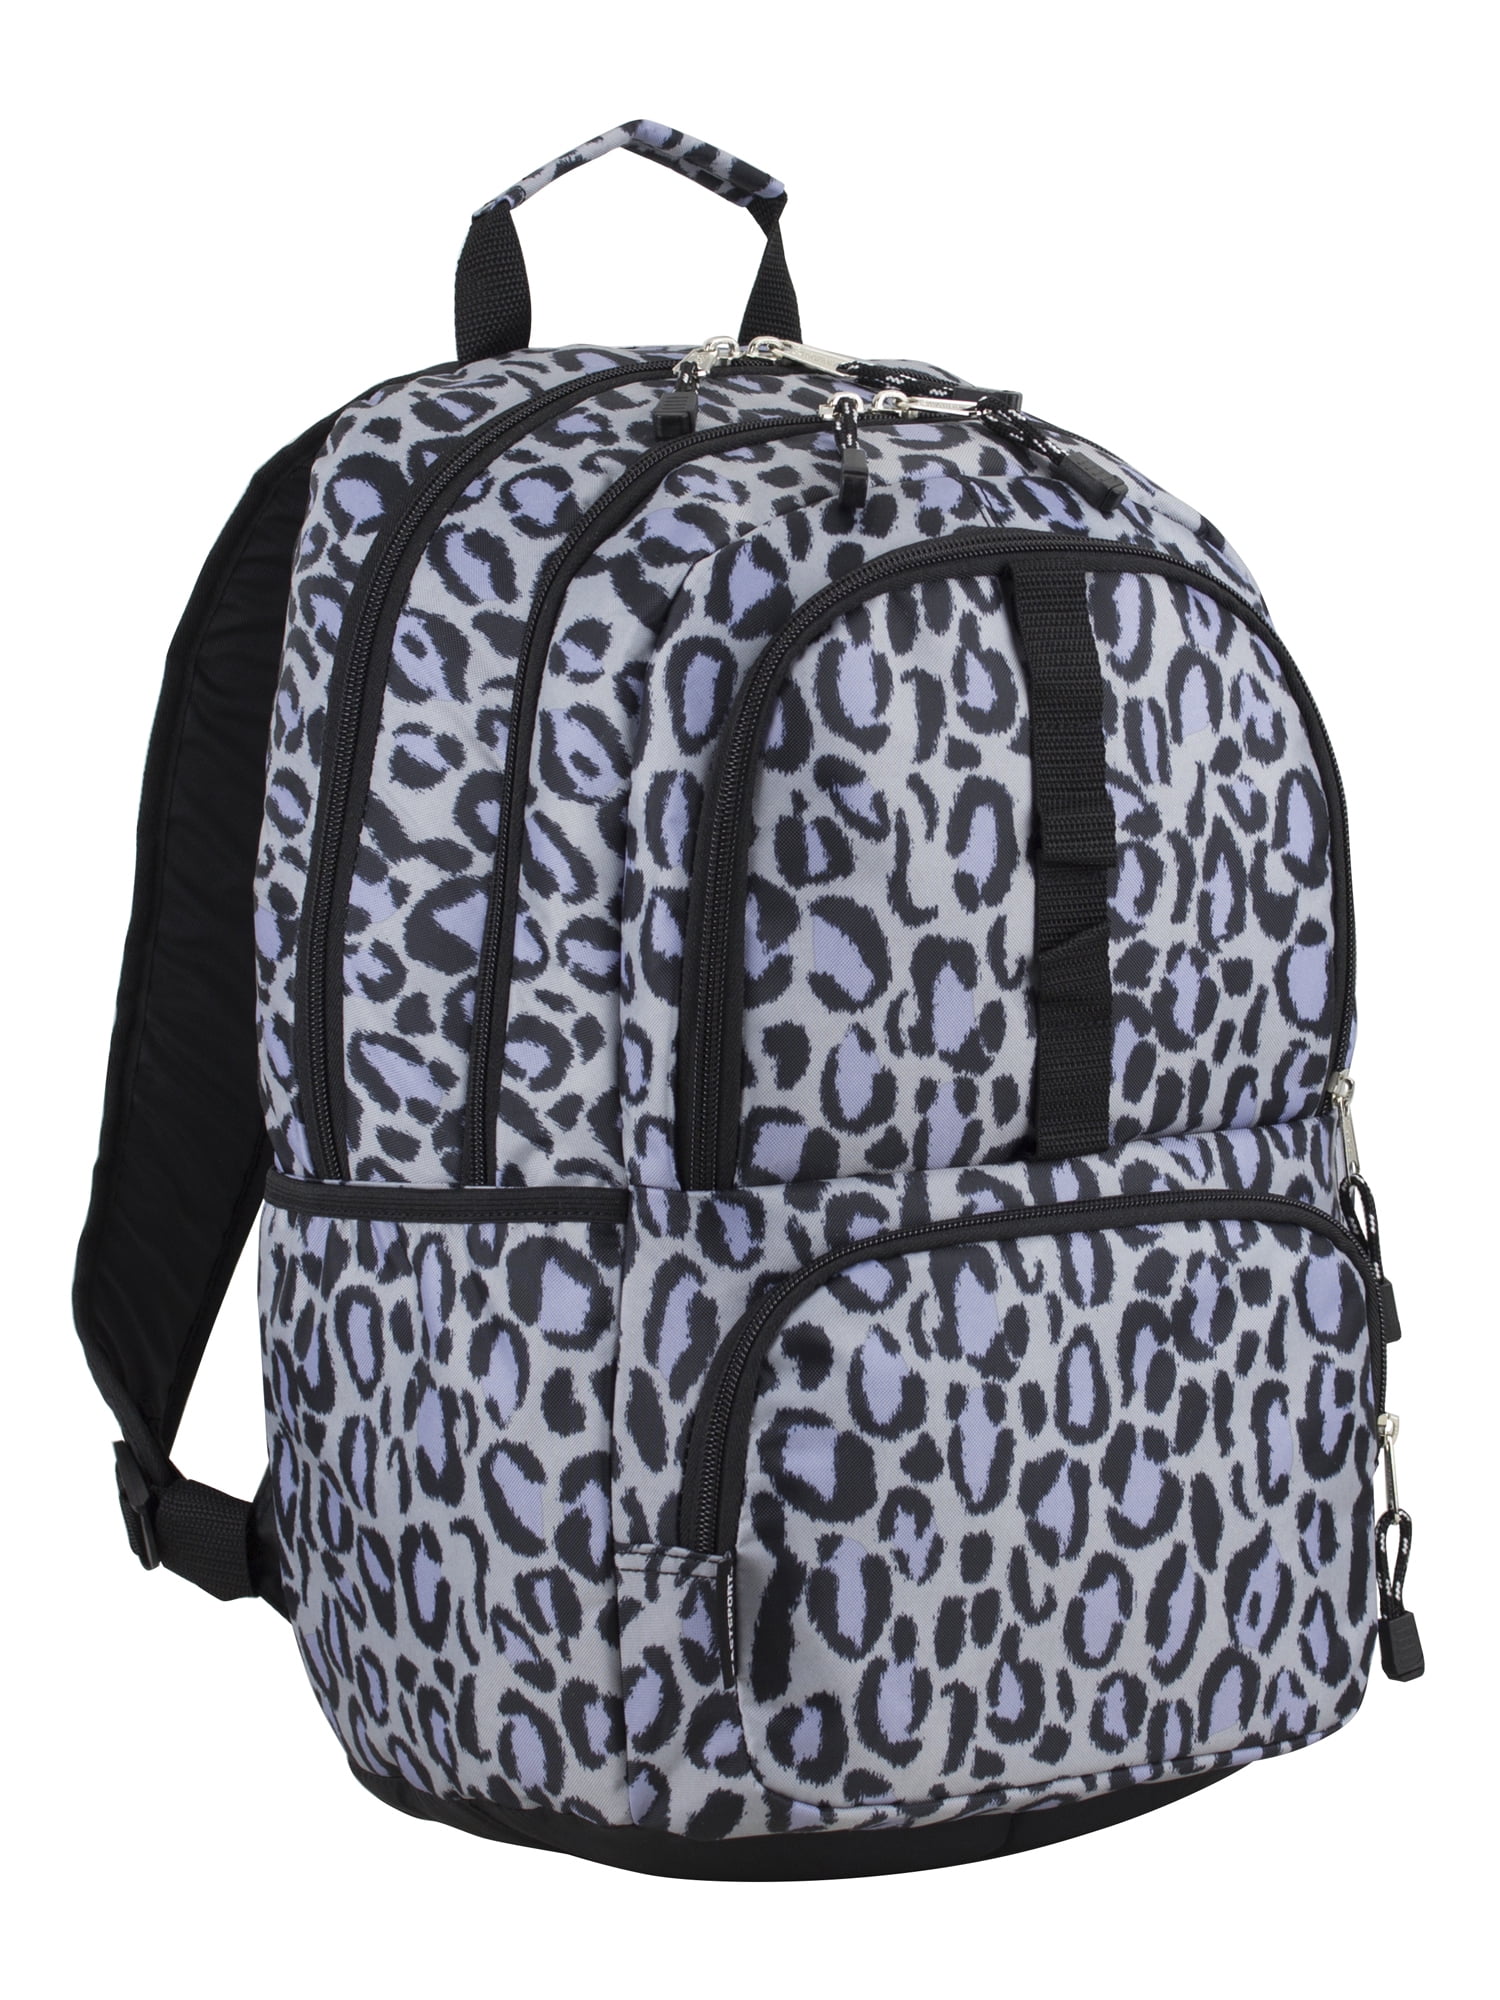 Eastsport Multi-Purpose Retreat Backpack, Snow Leopard - Walmart 